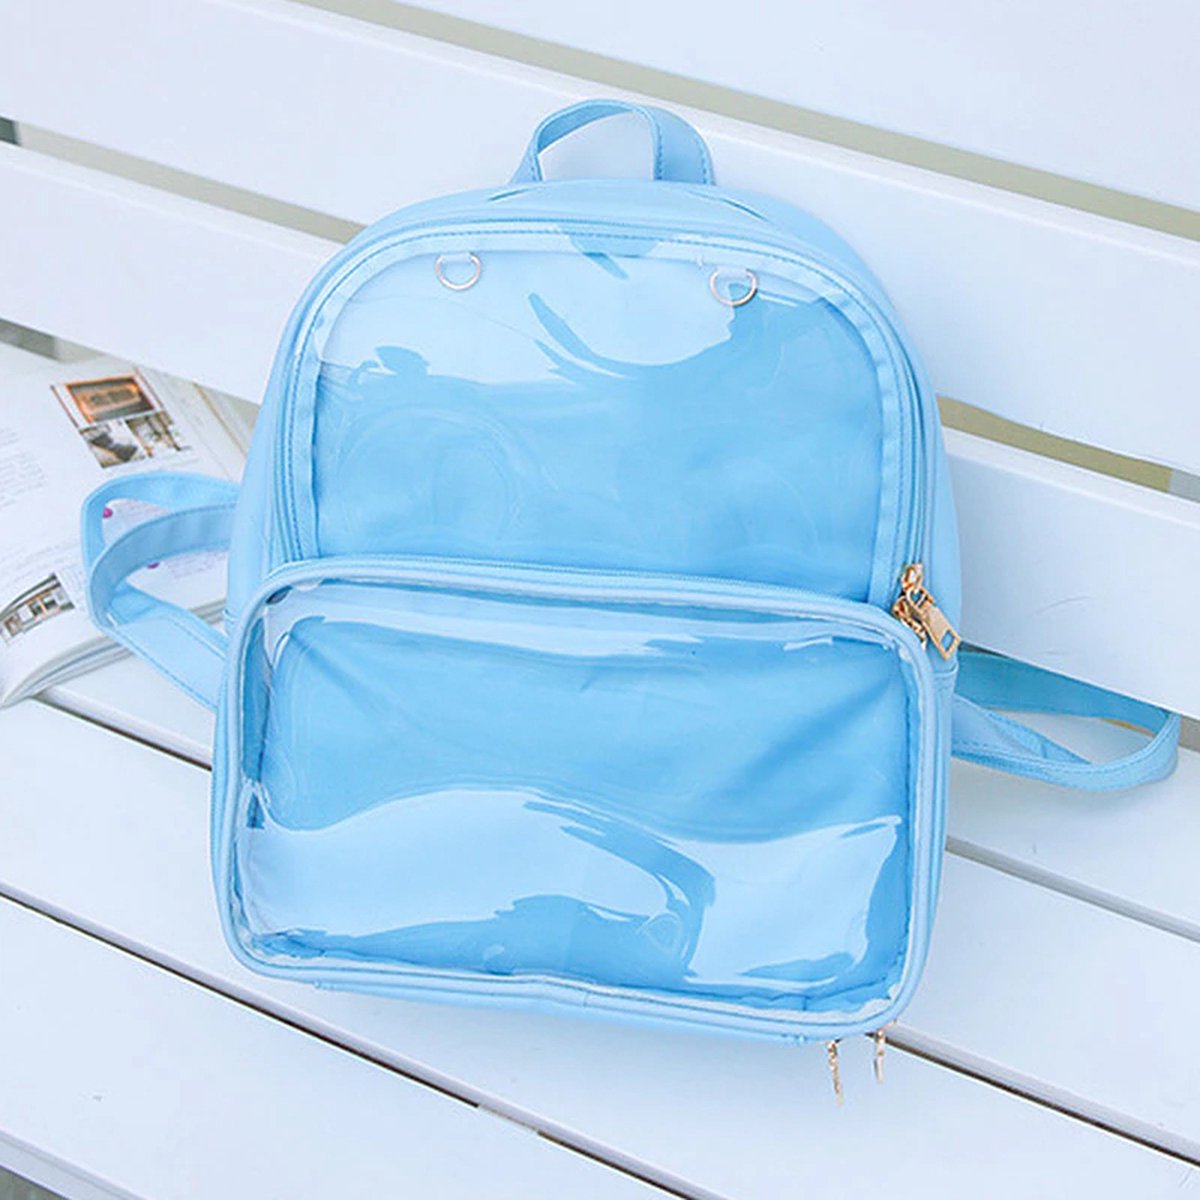 Ita bag | Ita tas blauw | kawaii tas | doorzichtige rugzak | kawaii harajuku tas | transparante tas